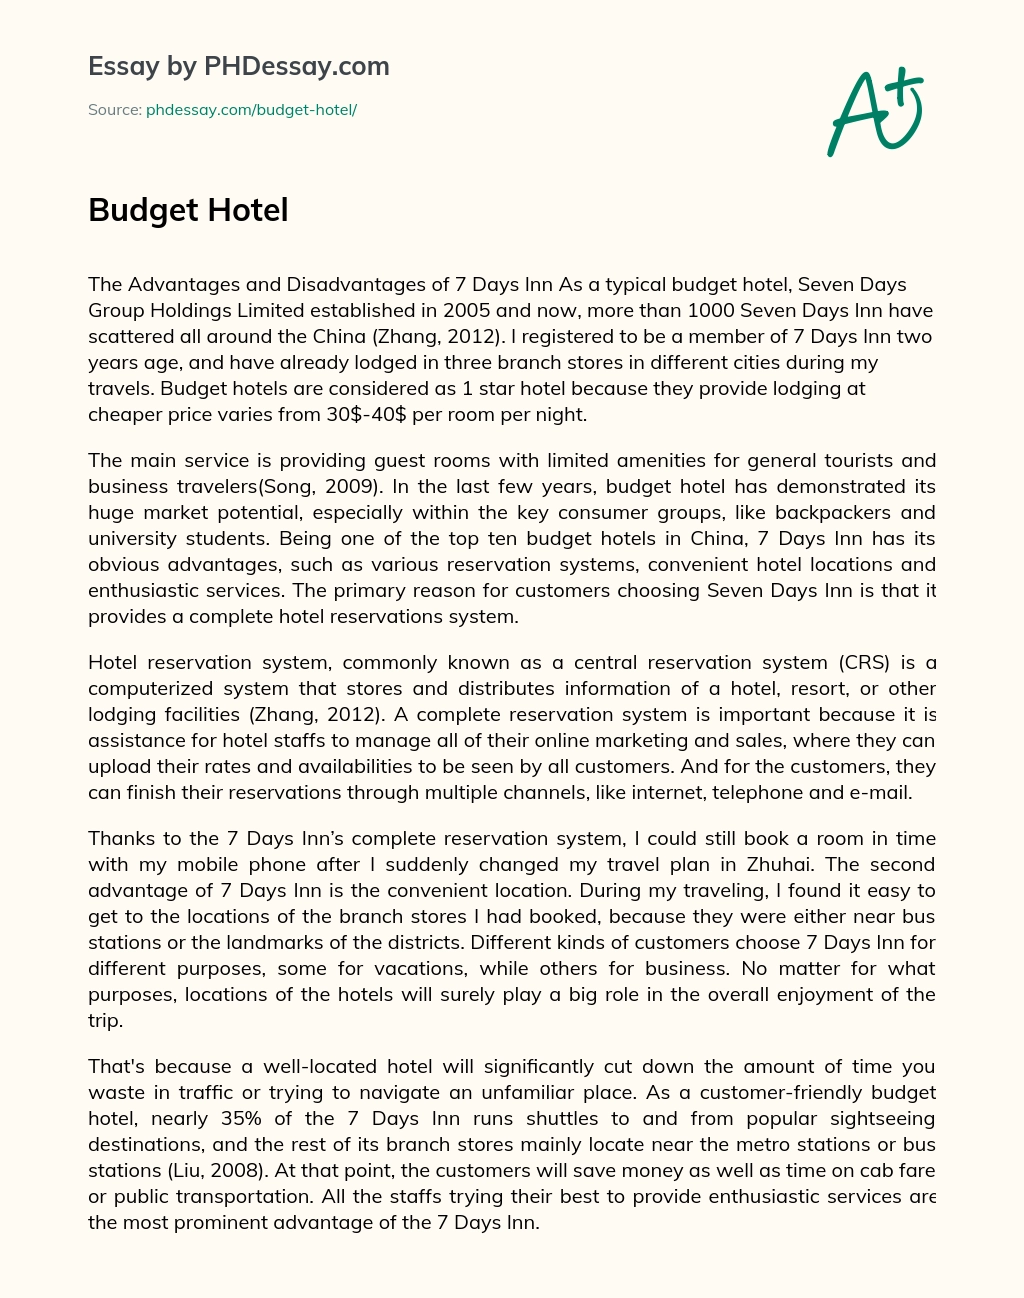 Budget Hotel essay